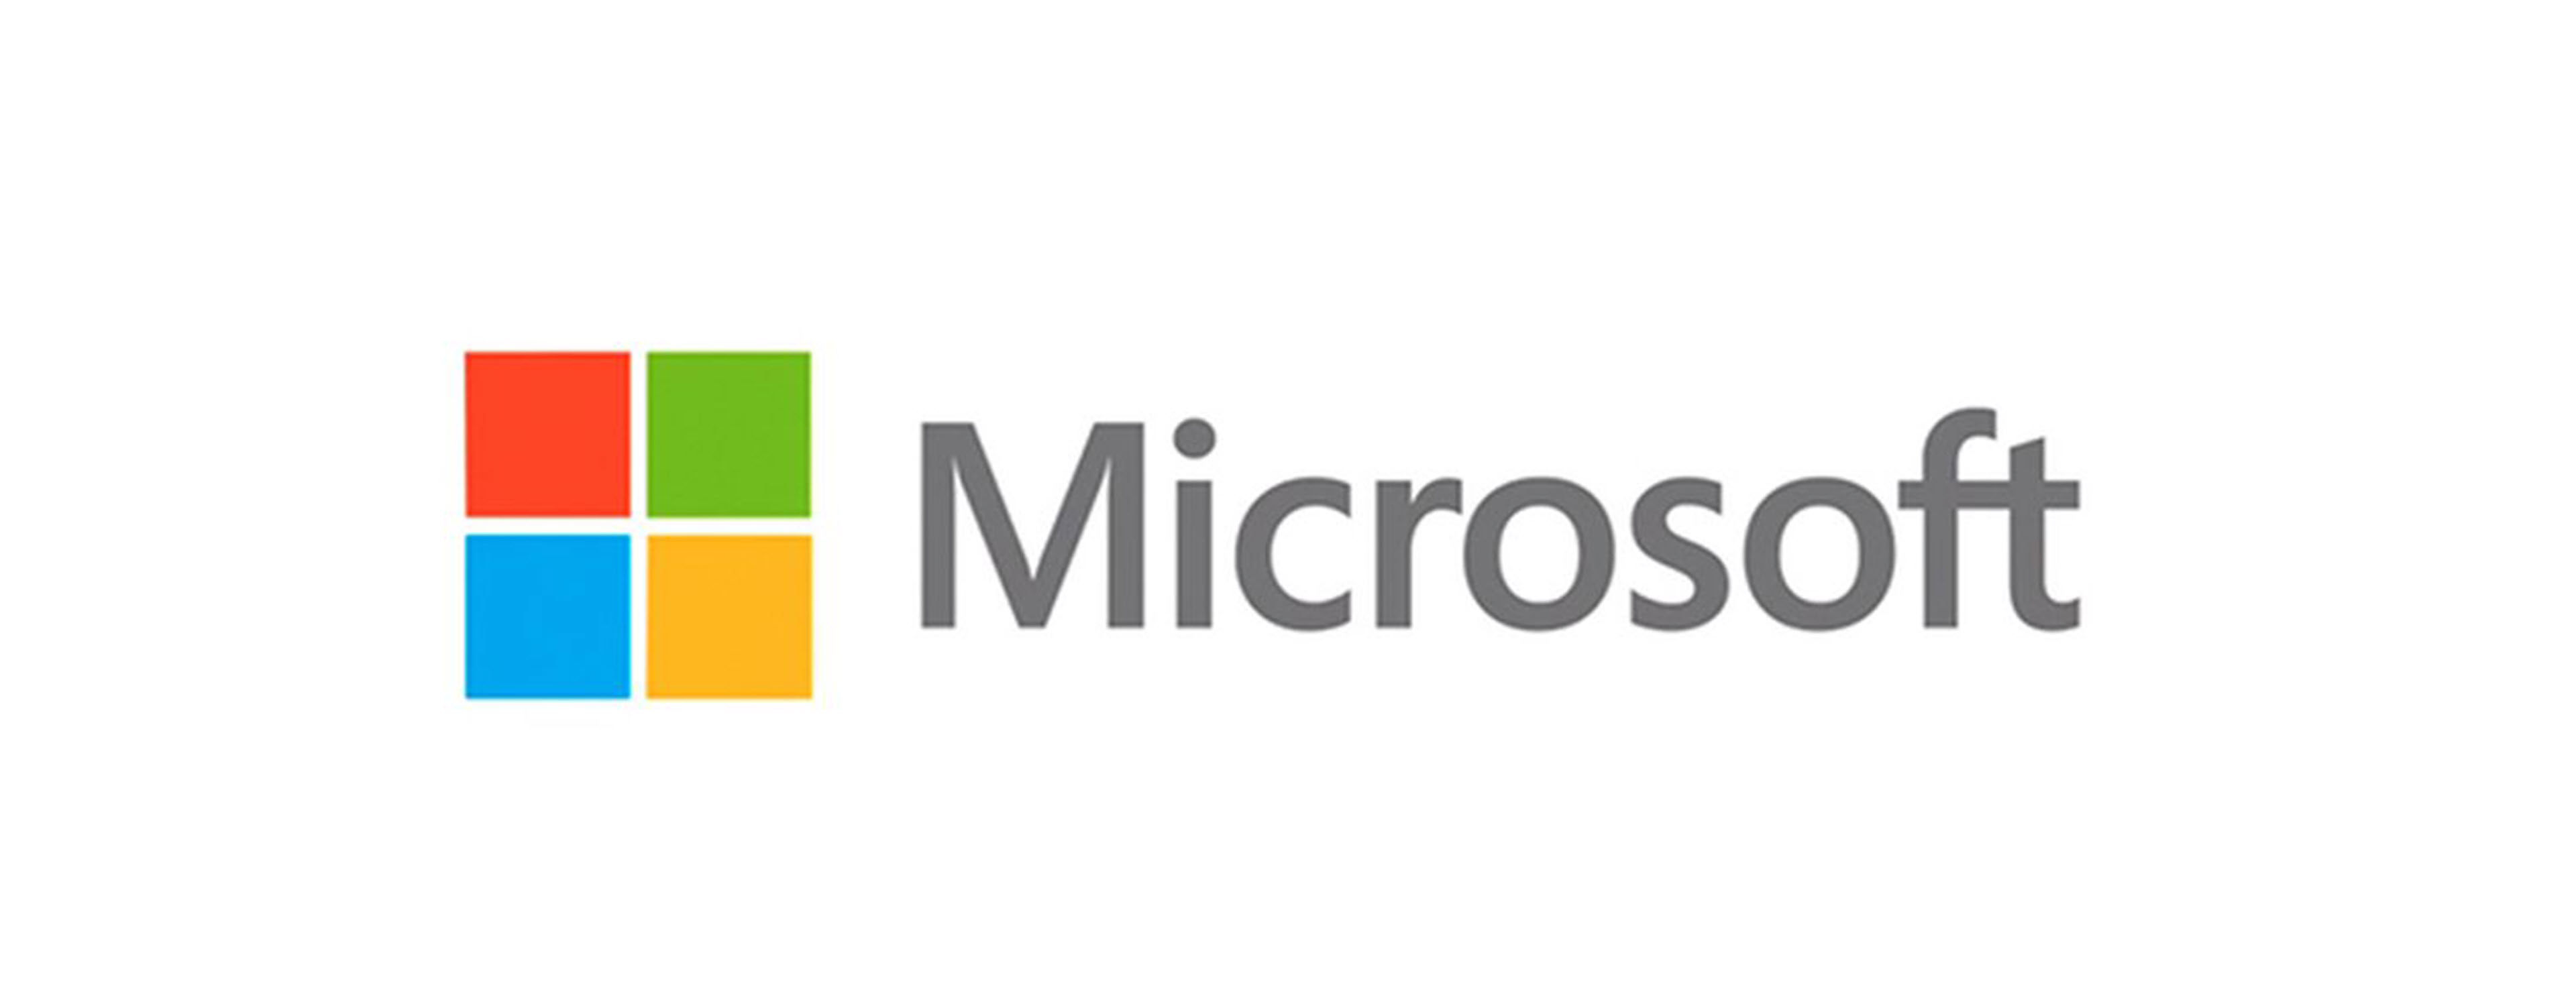             Microsoftのロゴ        